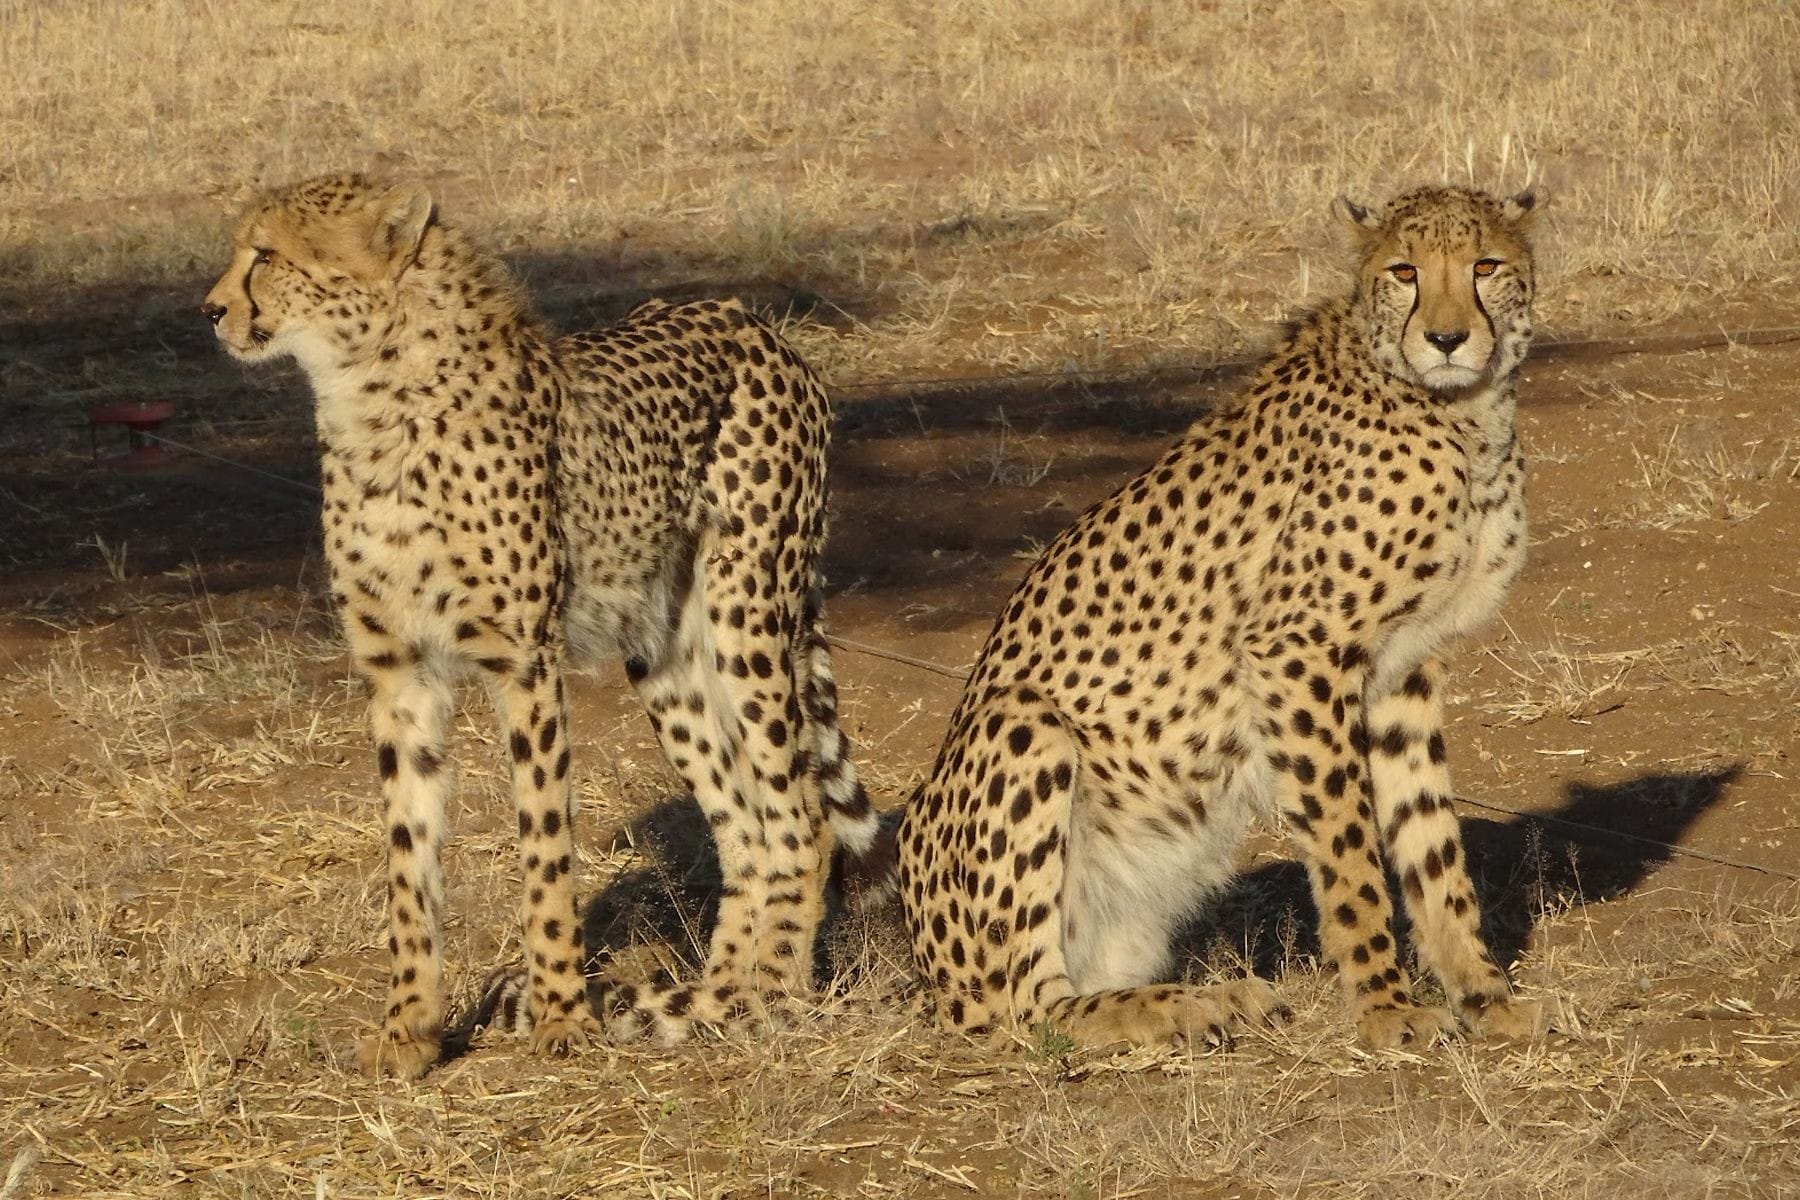 Cheetahs at the Cheetah Conservation Fund.